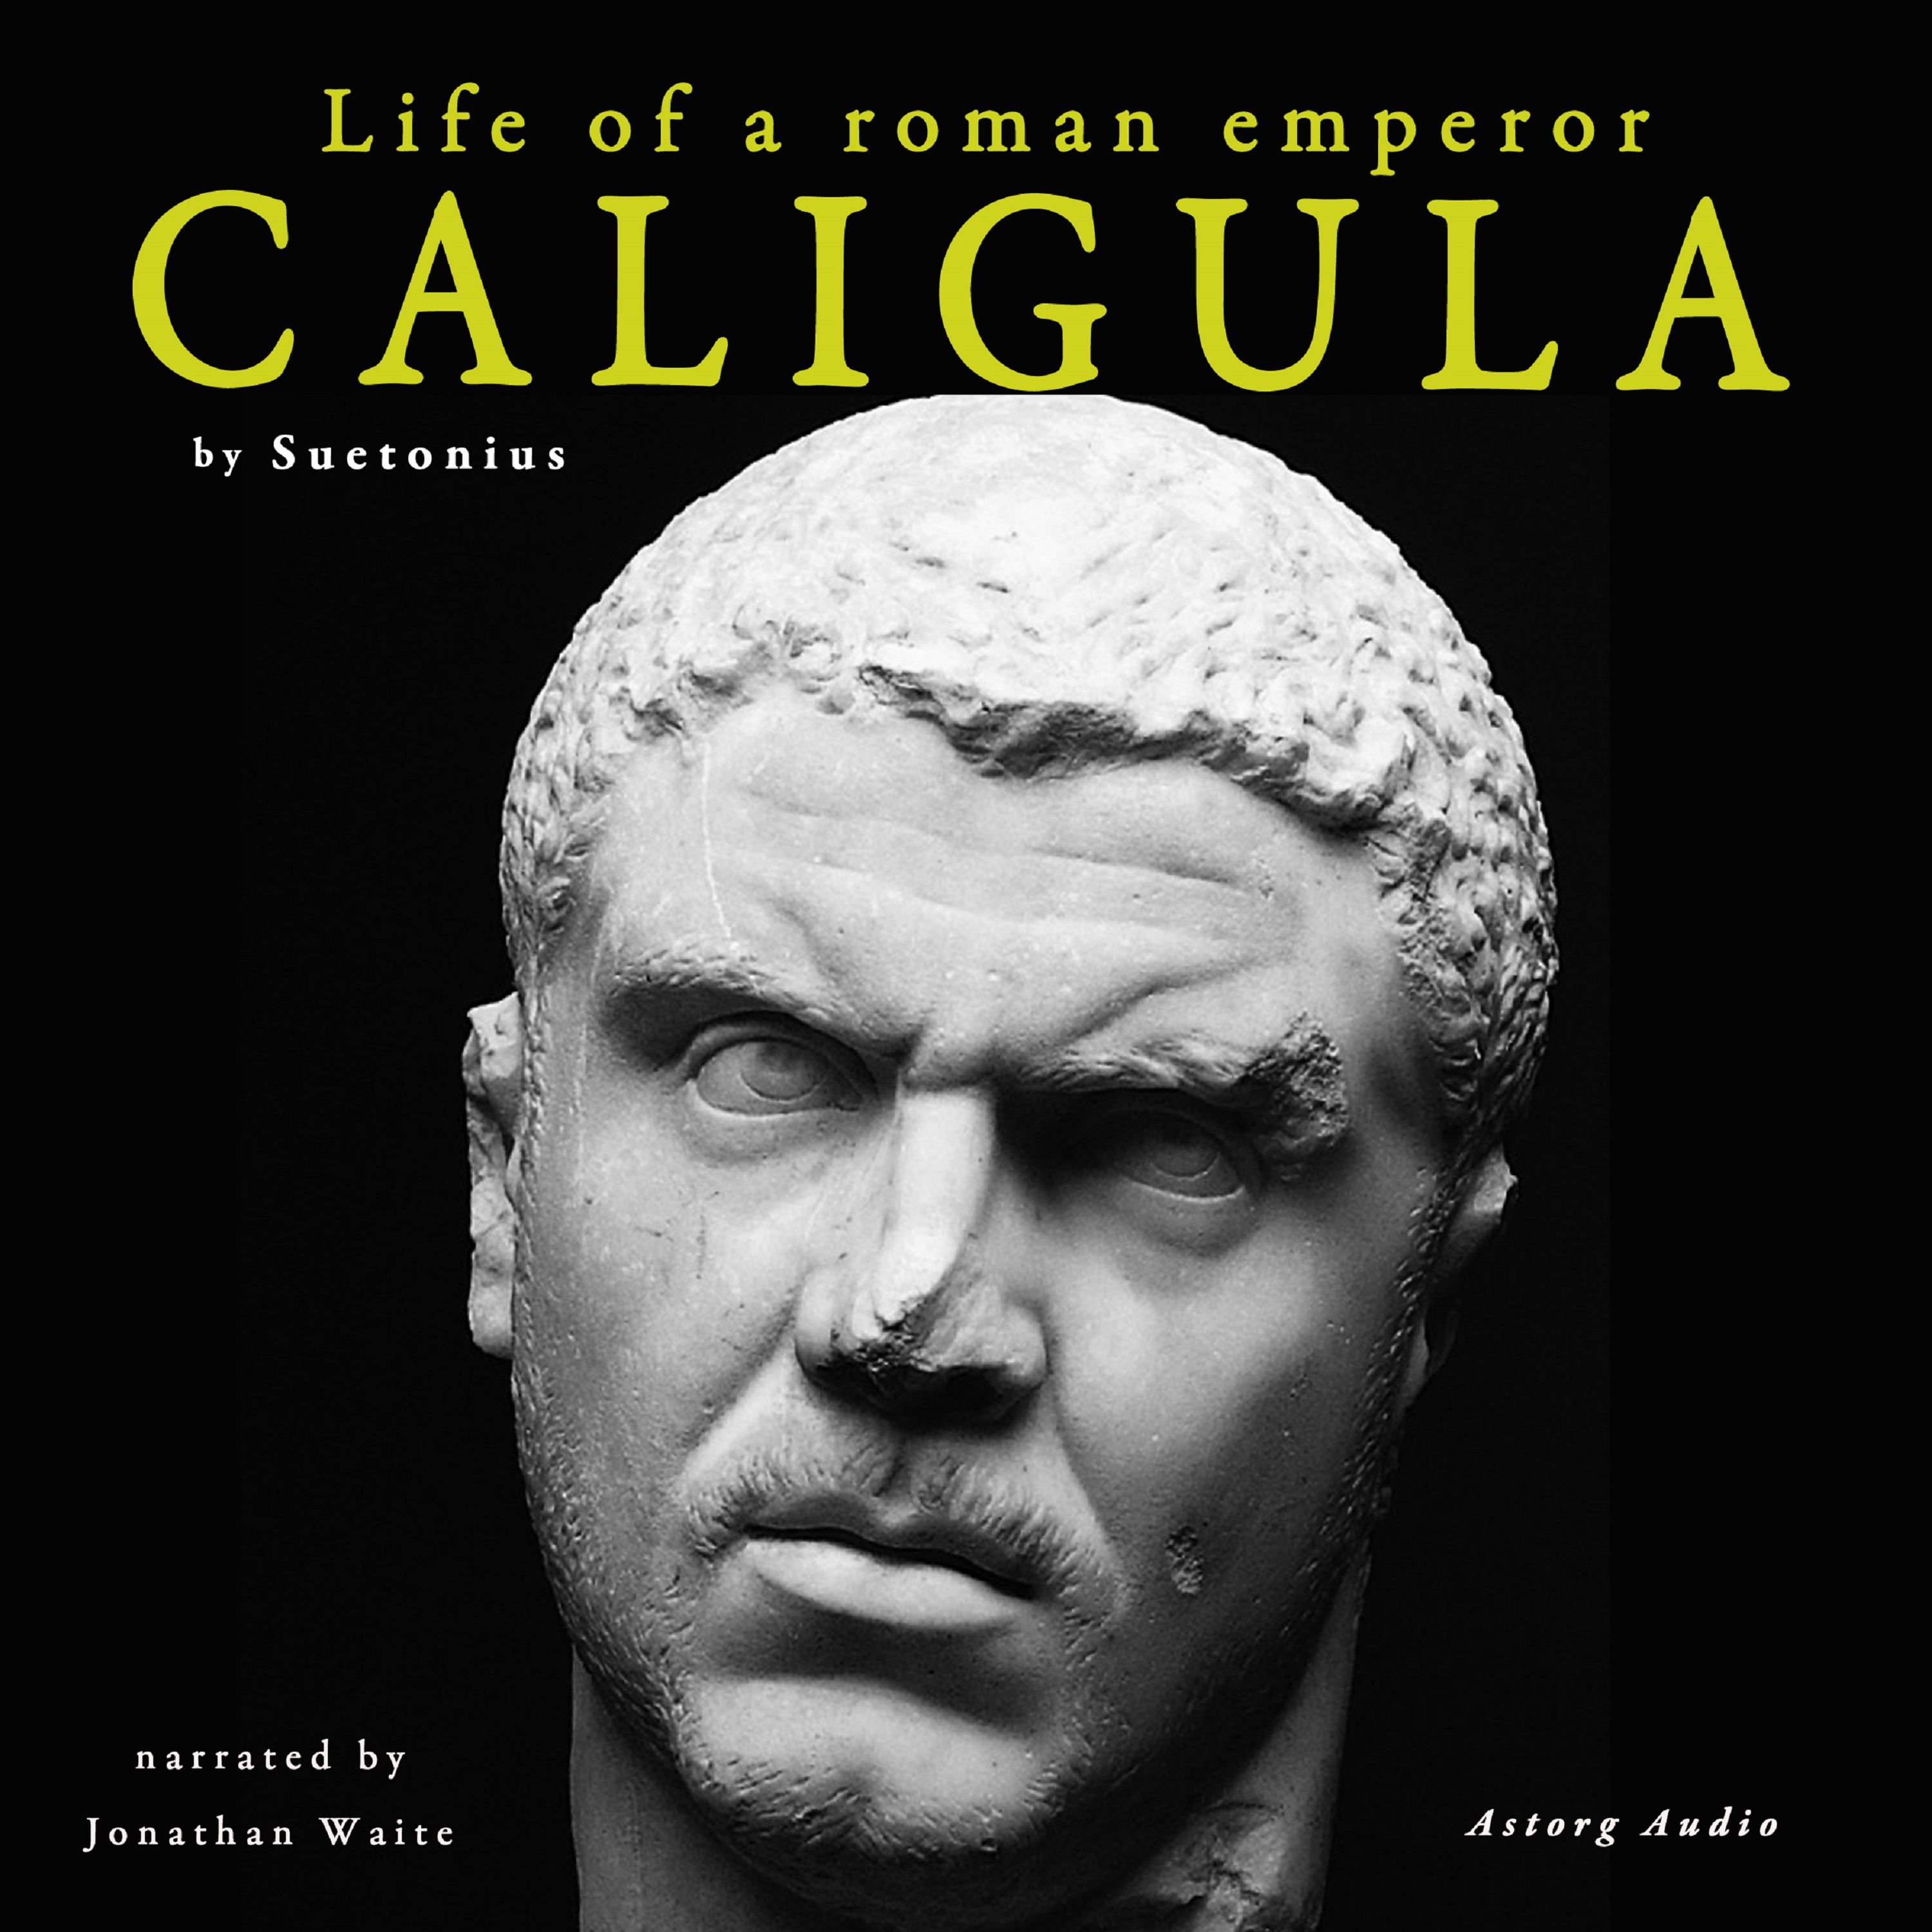 Caligula, Life of a Roman Emperor, audiobook by Suetonius